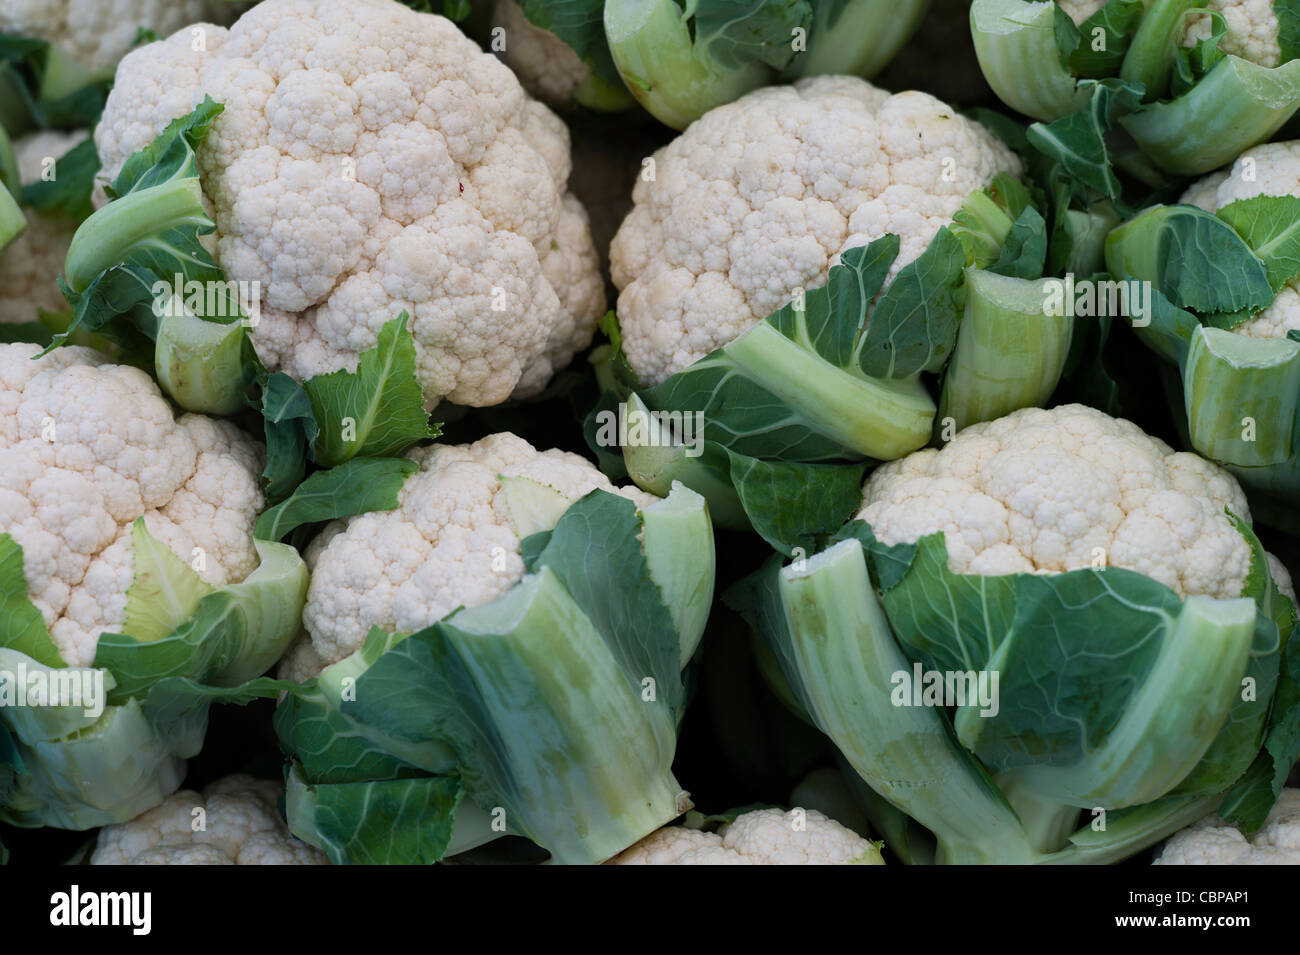 Cauliflower for sale in market Stock Photo